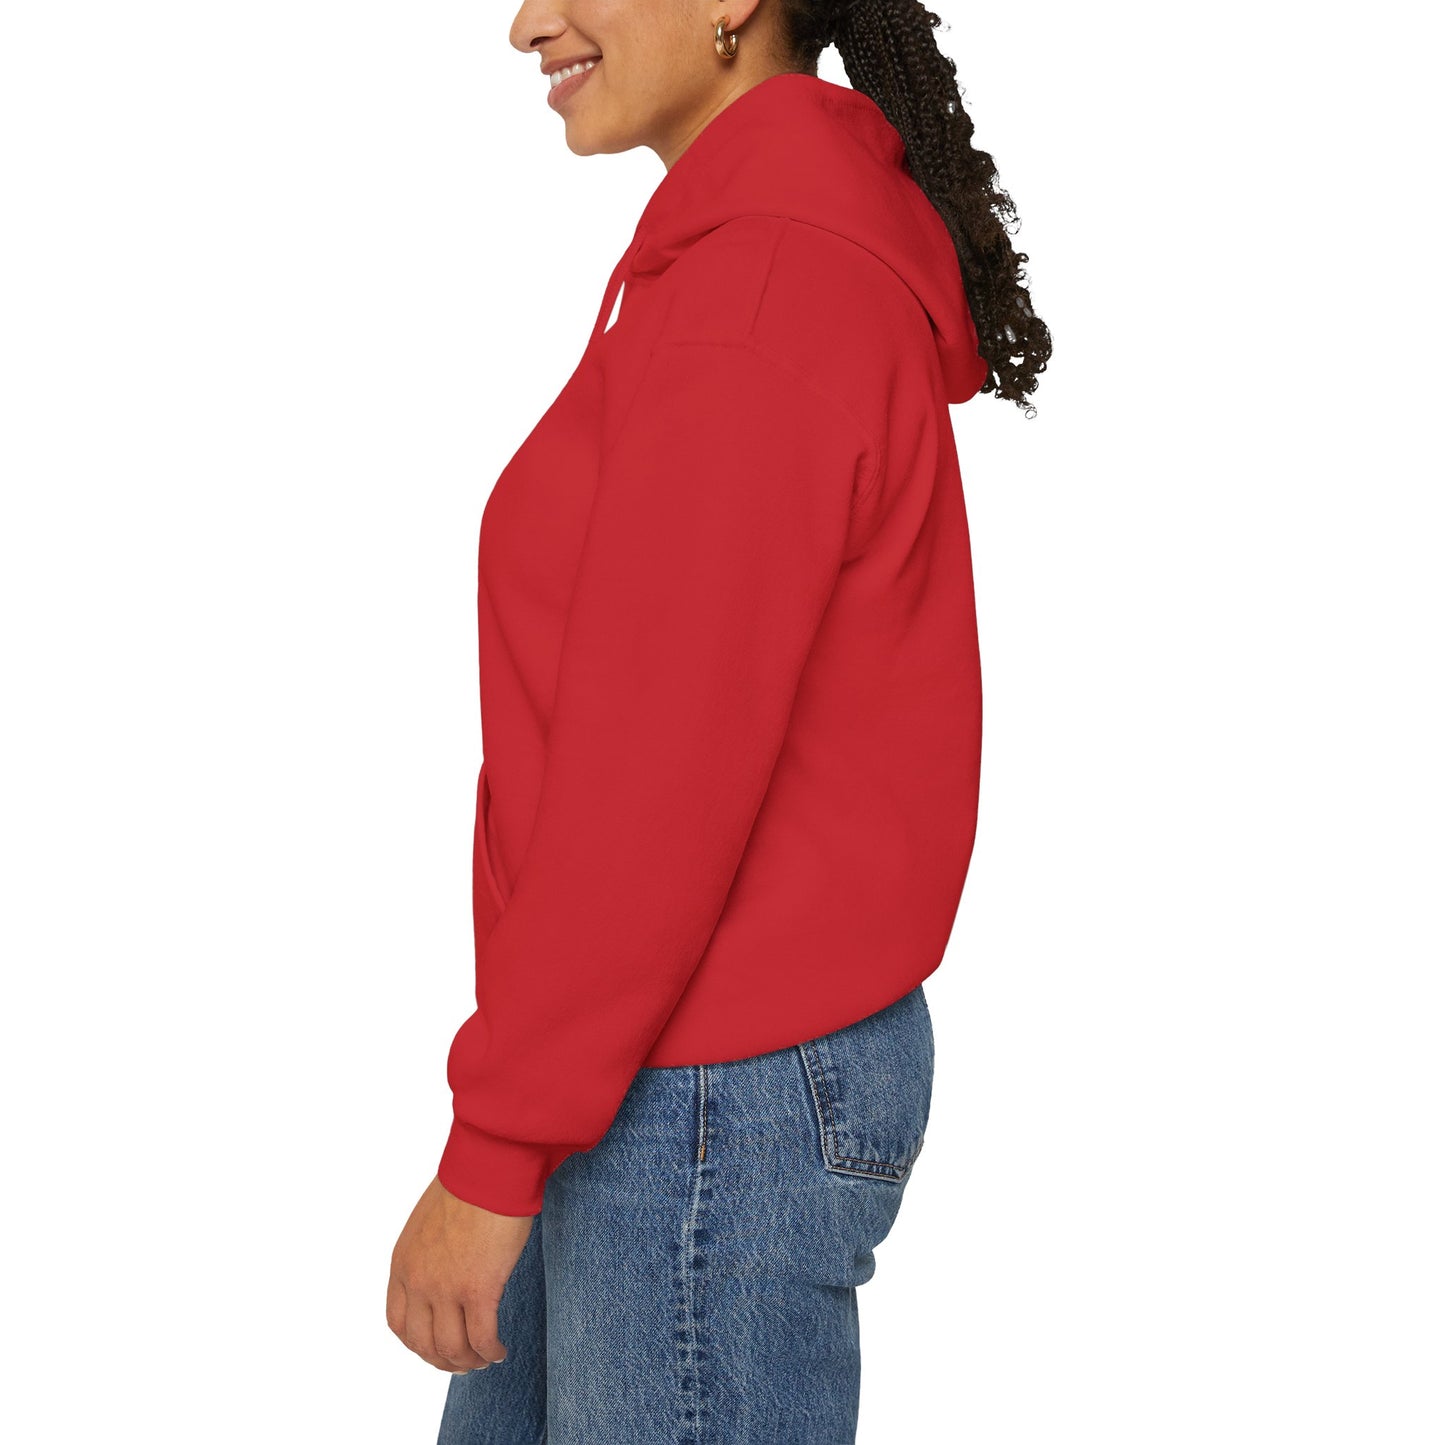 She's Armed And Dangerous Ephesians 6:10 Women's Christian Hooded Pullover Sweatshirt